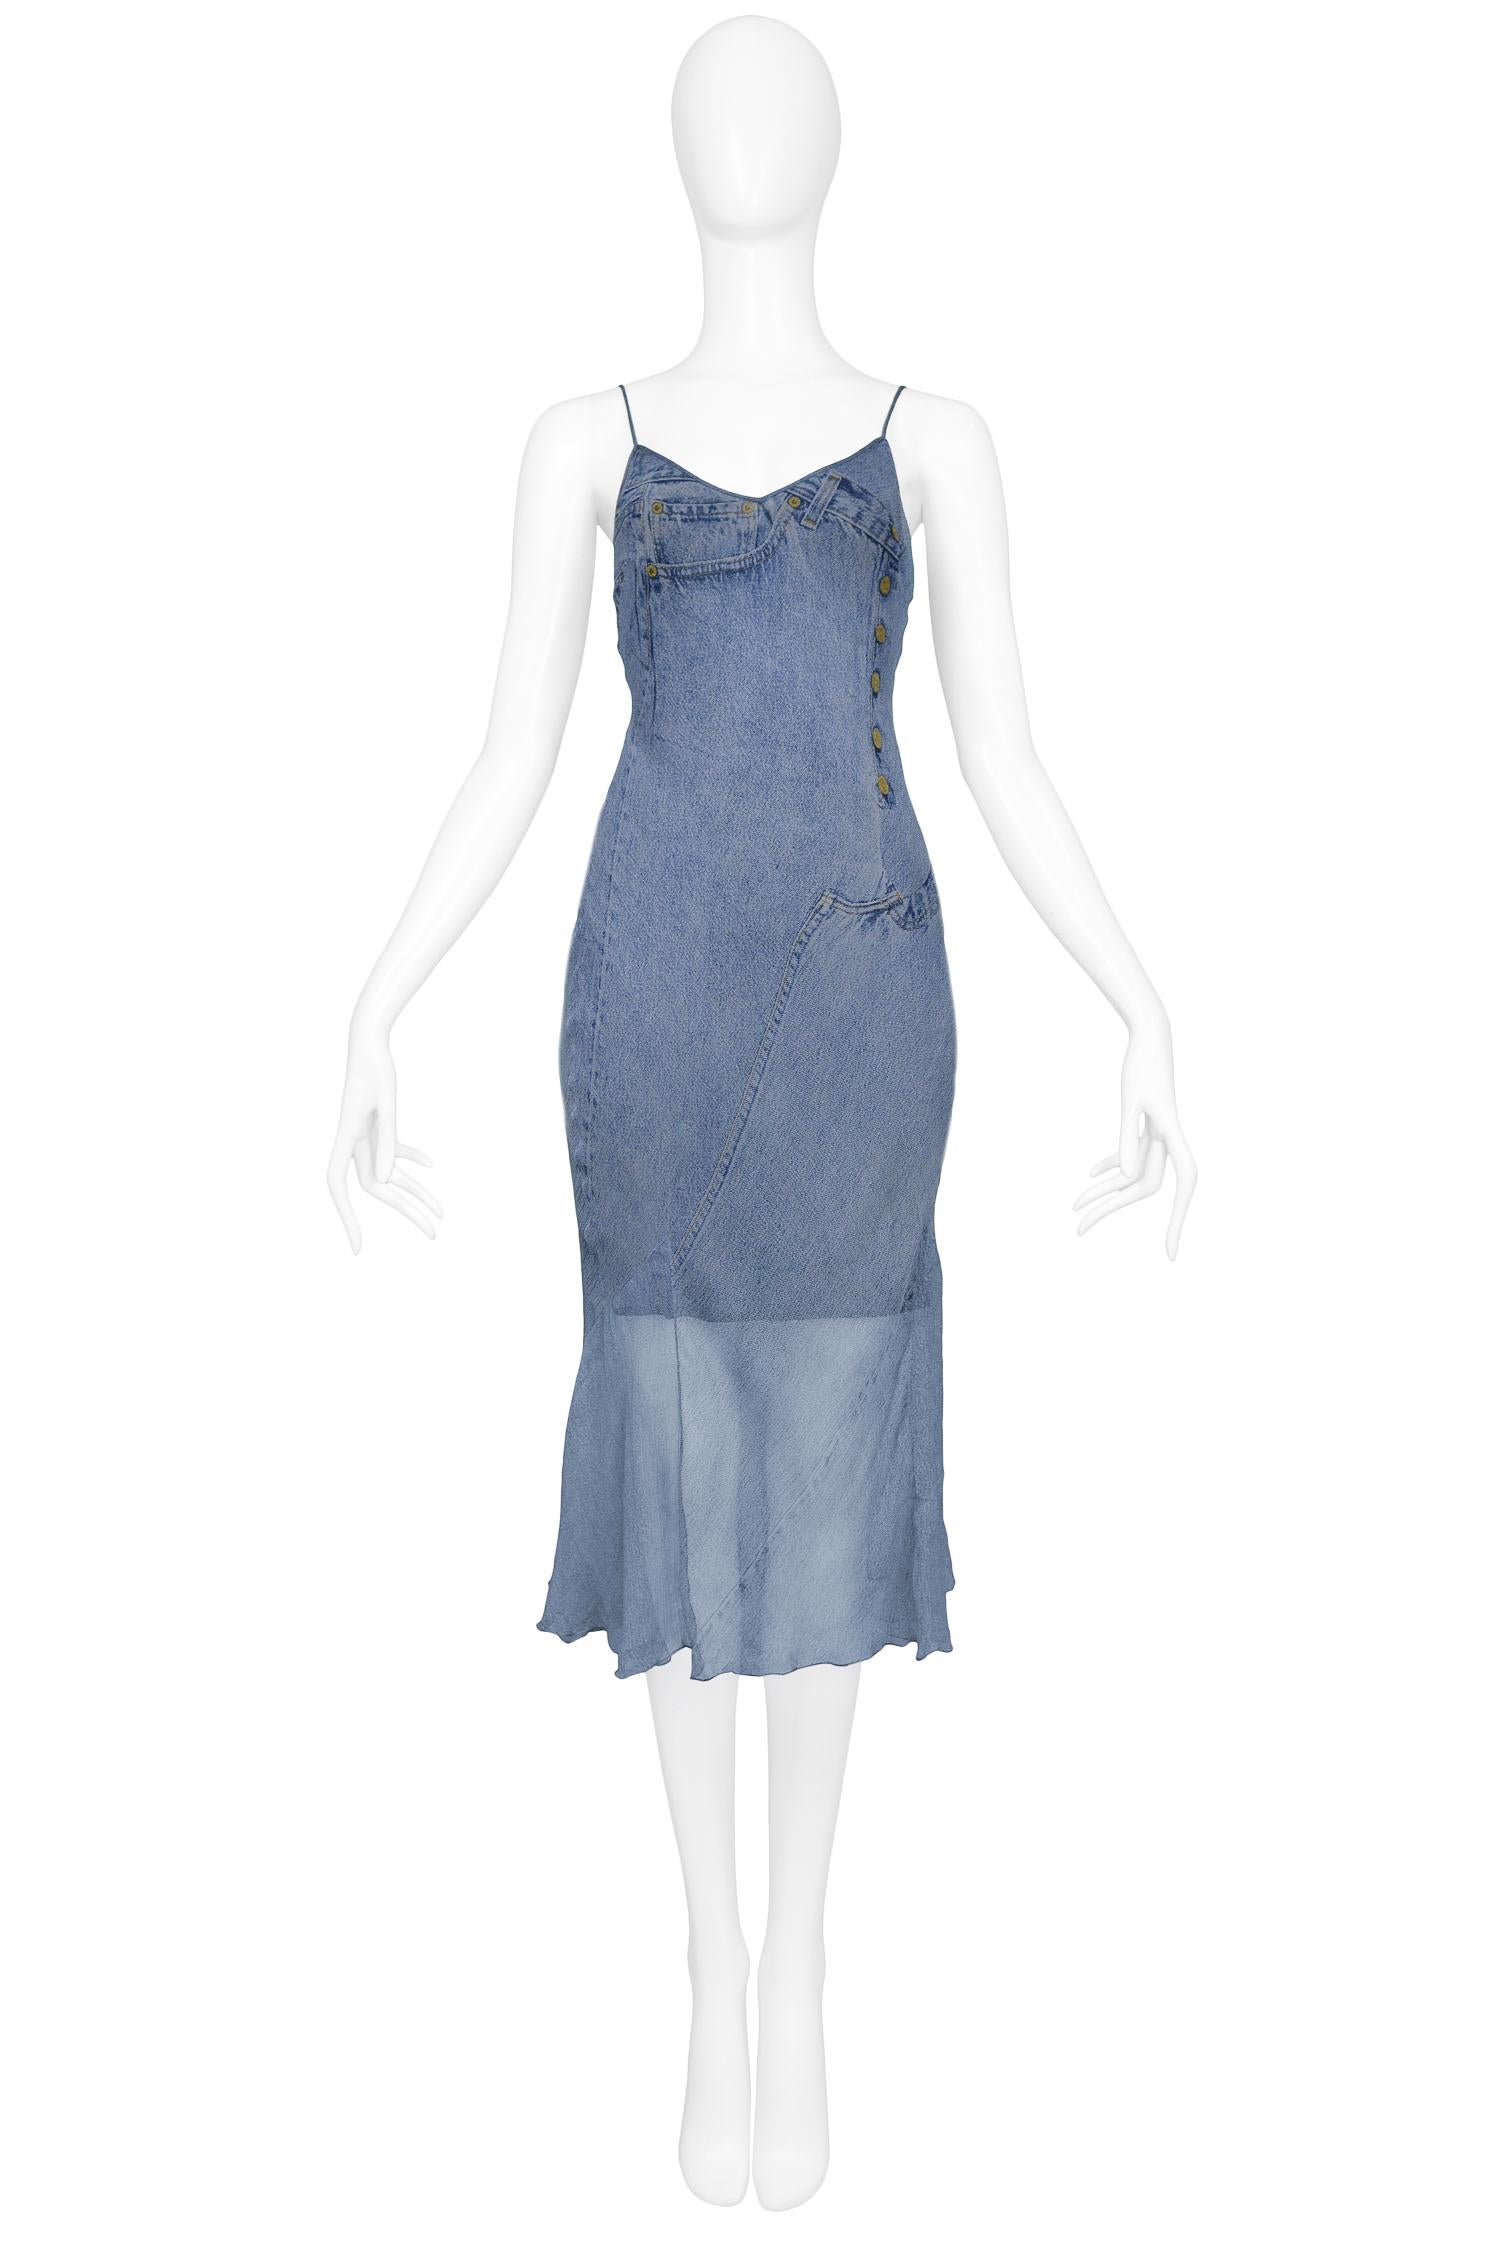 Vintage John Galliano for Christian Dior trompe l'oeil denim silk slip dress. Spring/Summer 2000 Collection.

Excellent Condition. 

Size: 38